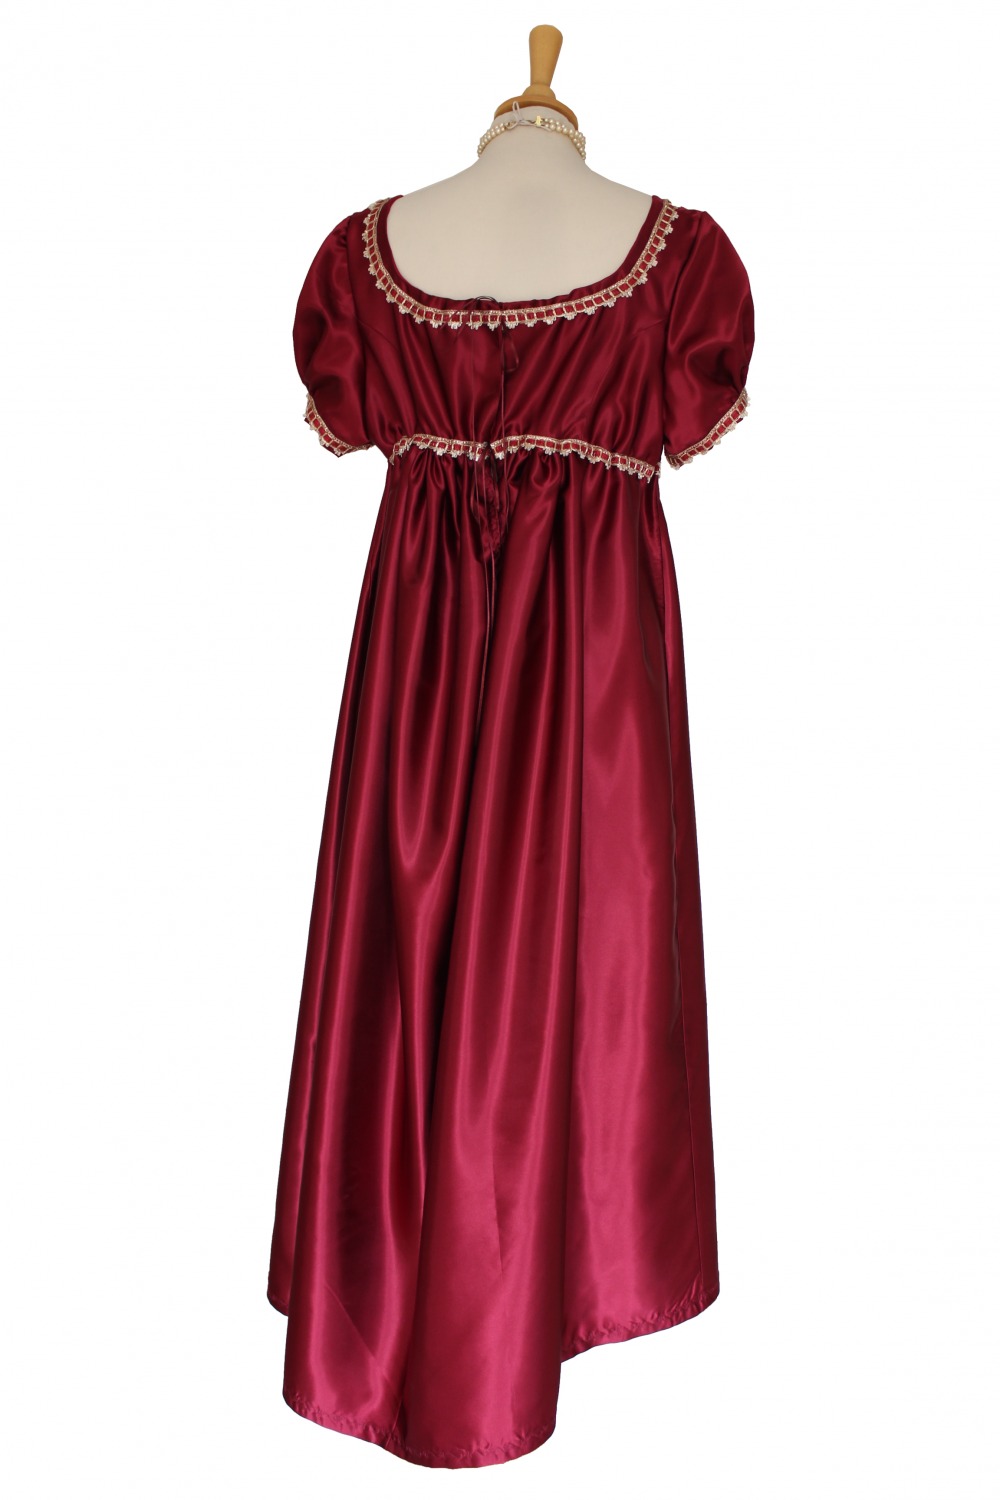 Ladies 18th 19th Regency Jane Austen Petite Costume Evening Ball Gown Size 14 - 16 Image